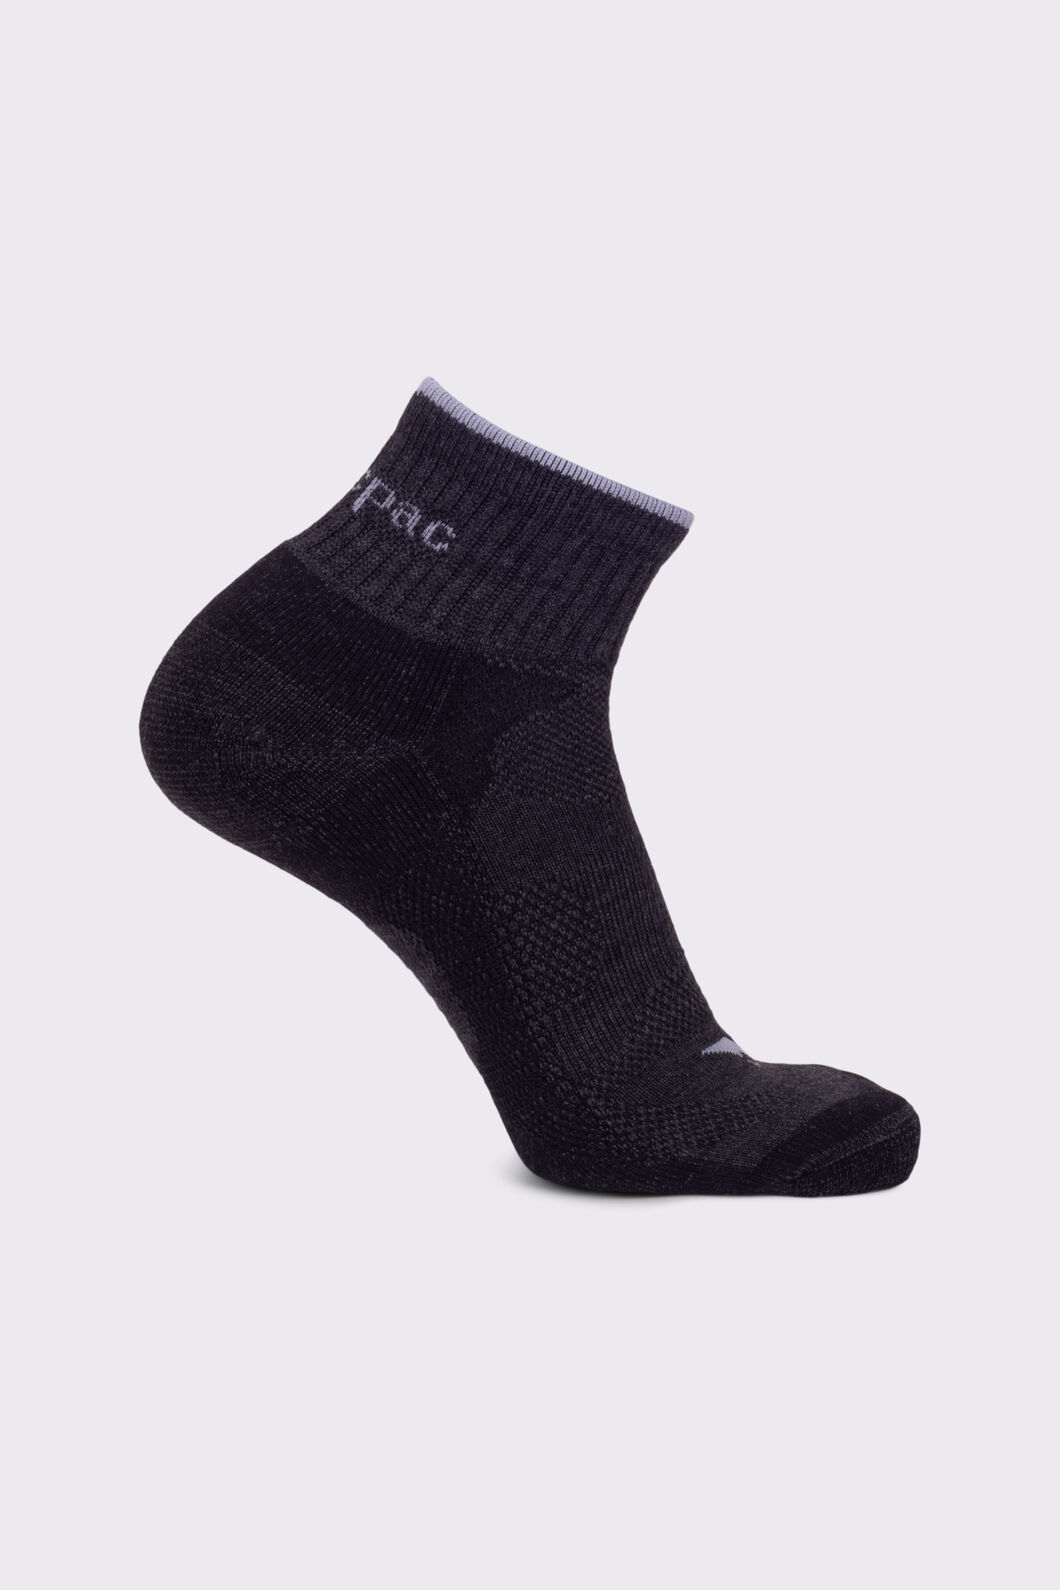 Macpac Merino Quarter Socks